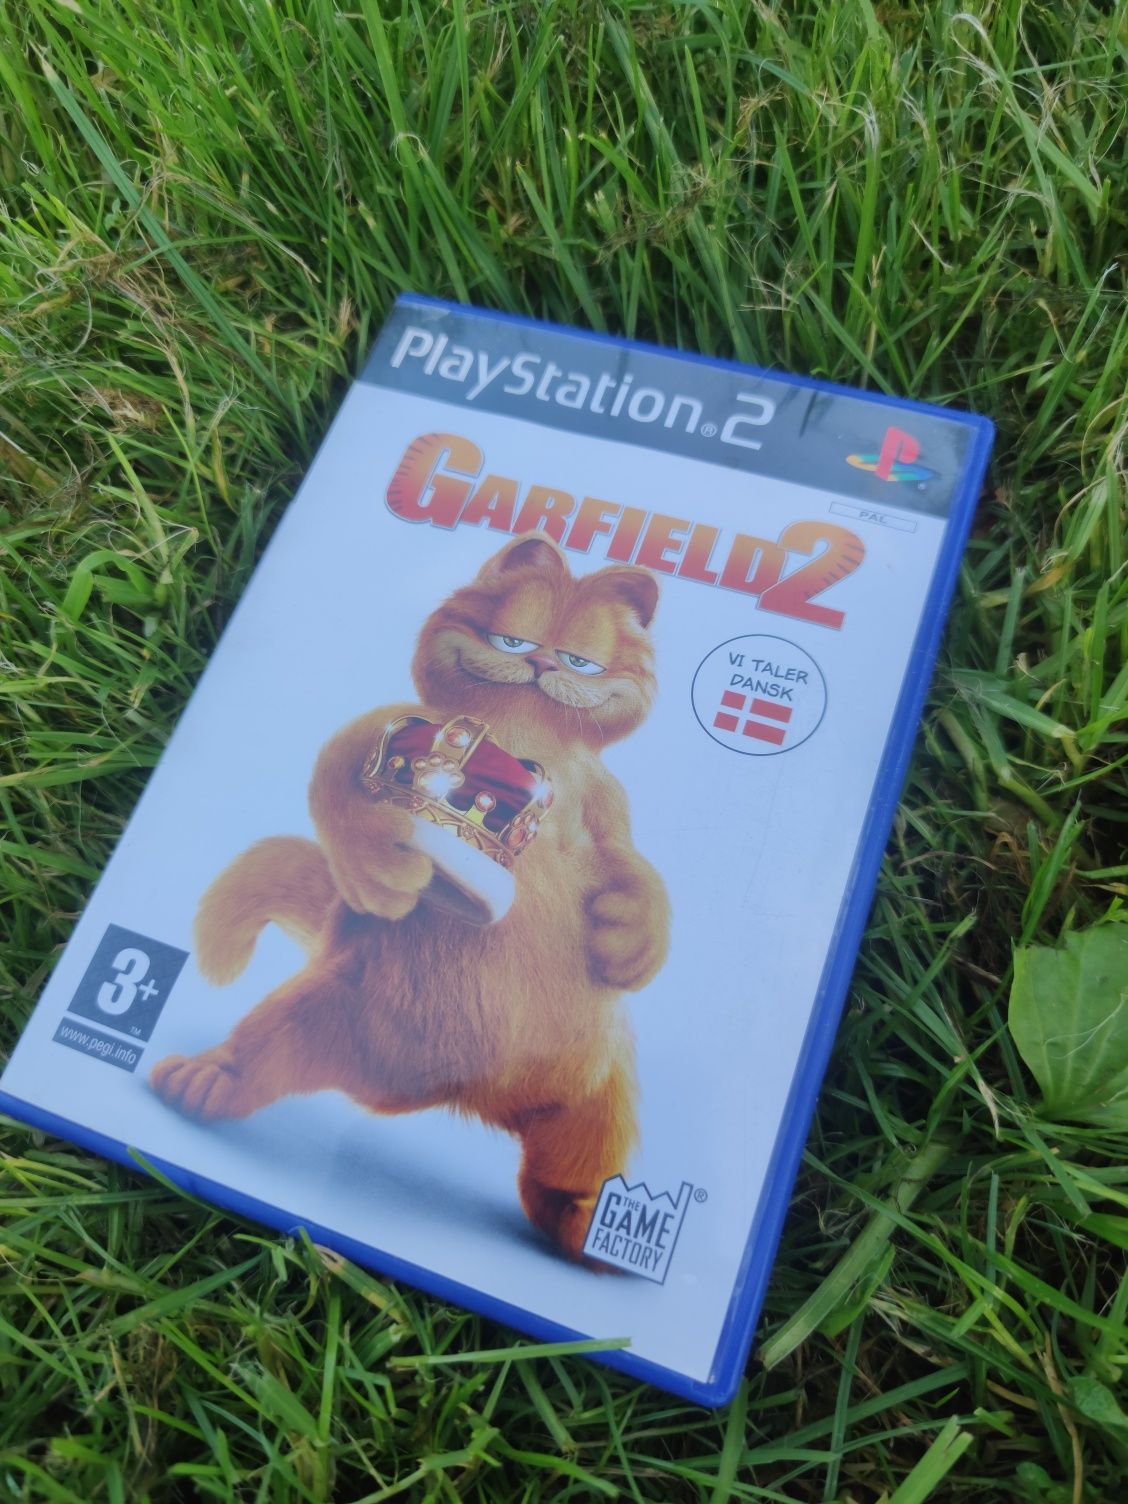 Garfield 2 ps2 gra na konsolę PlayStation 2 pudełko